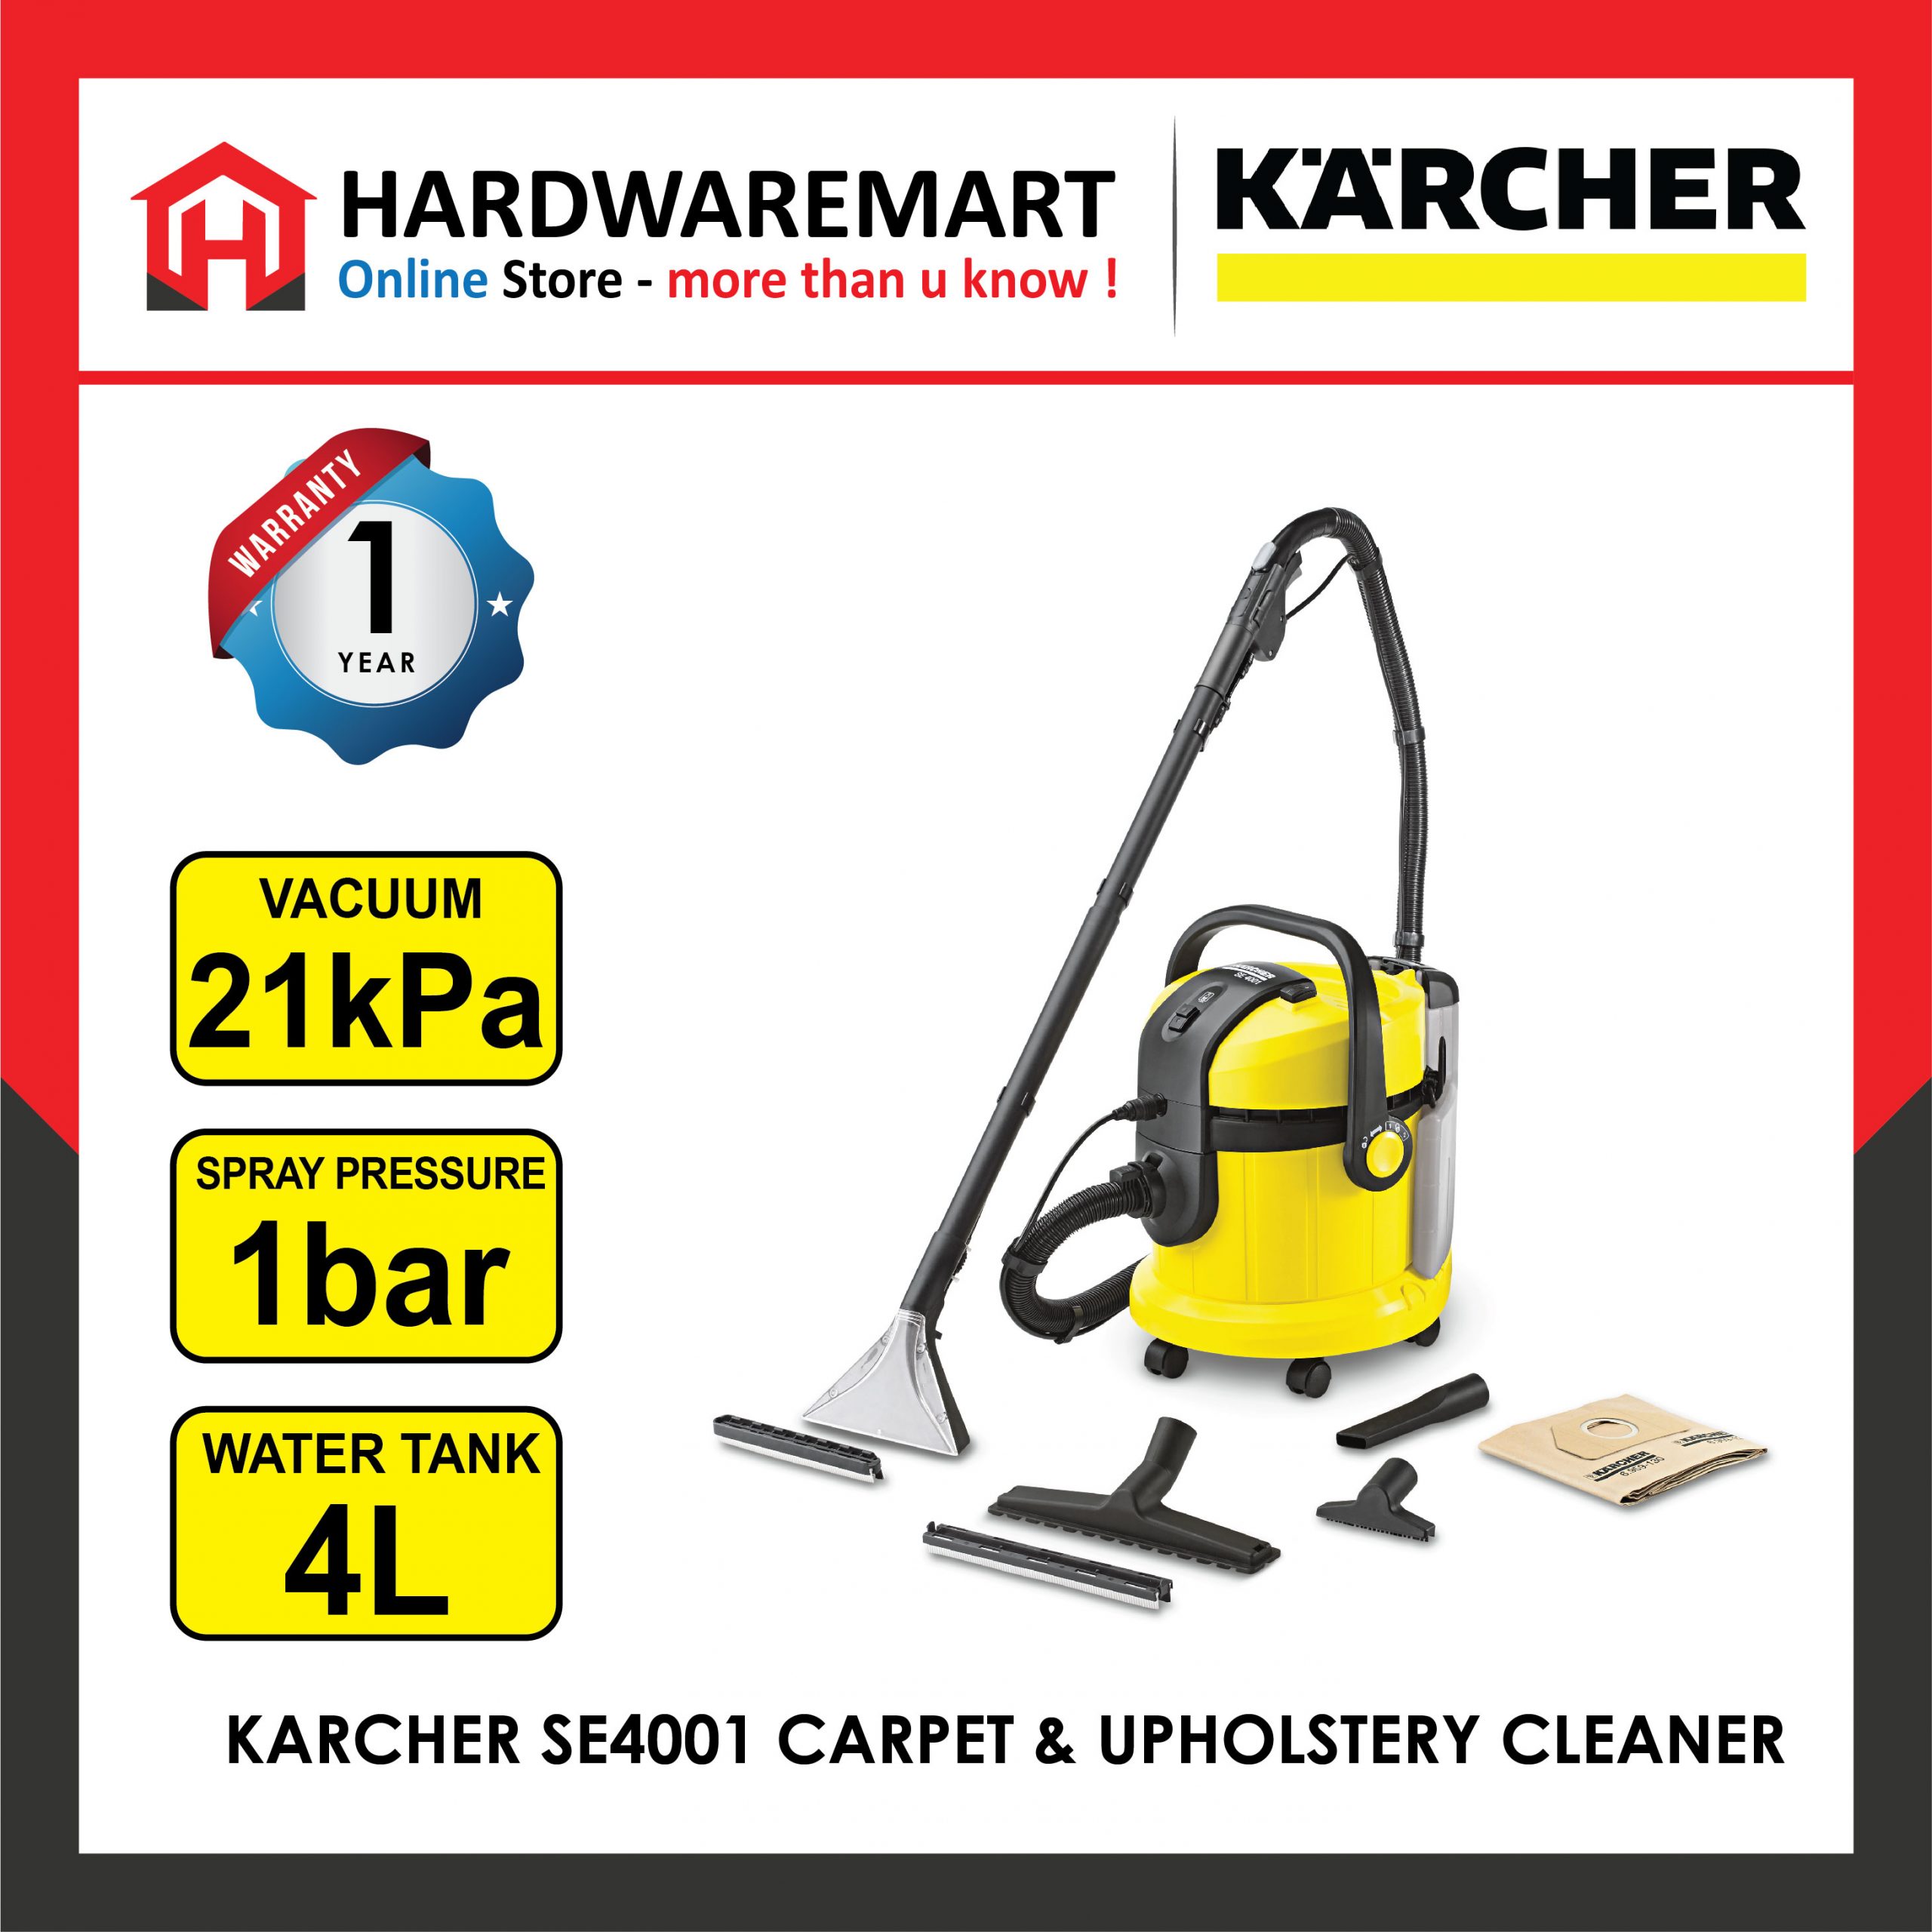 Kärcher SE 4001 Vaccum Cleaner - 10811300 for sale online